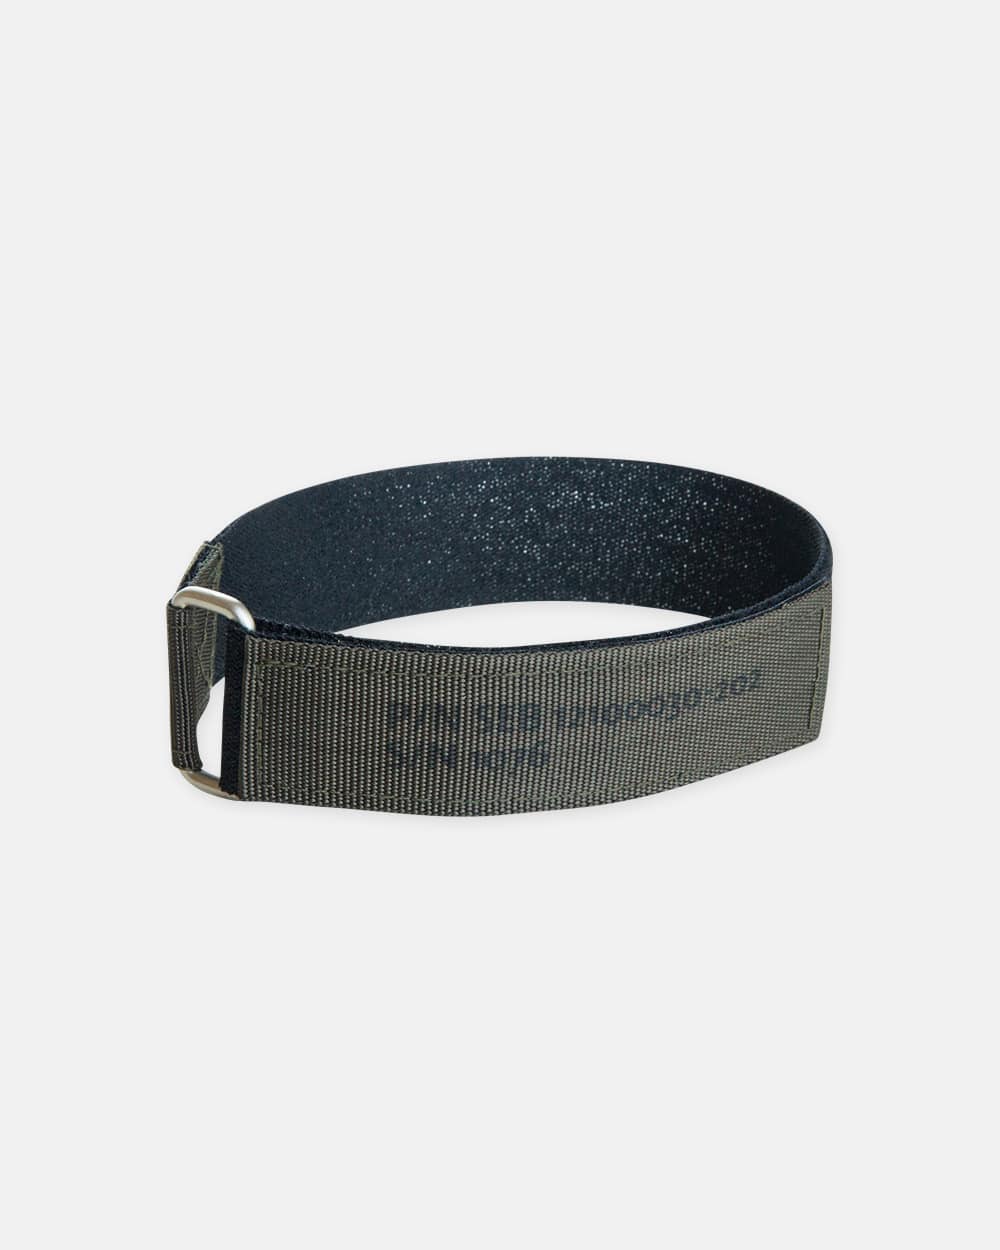 NASA Velcro Strap - Kaki Nylon & Black Velcro Watch Band